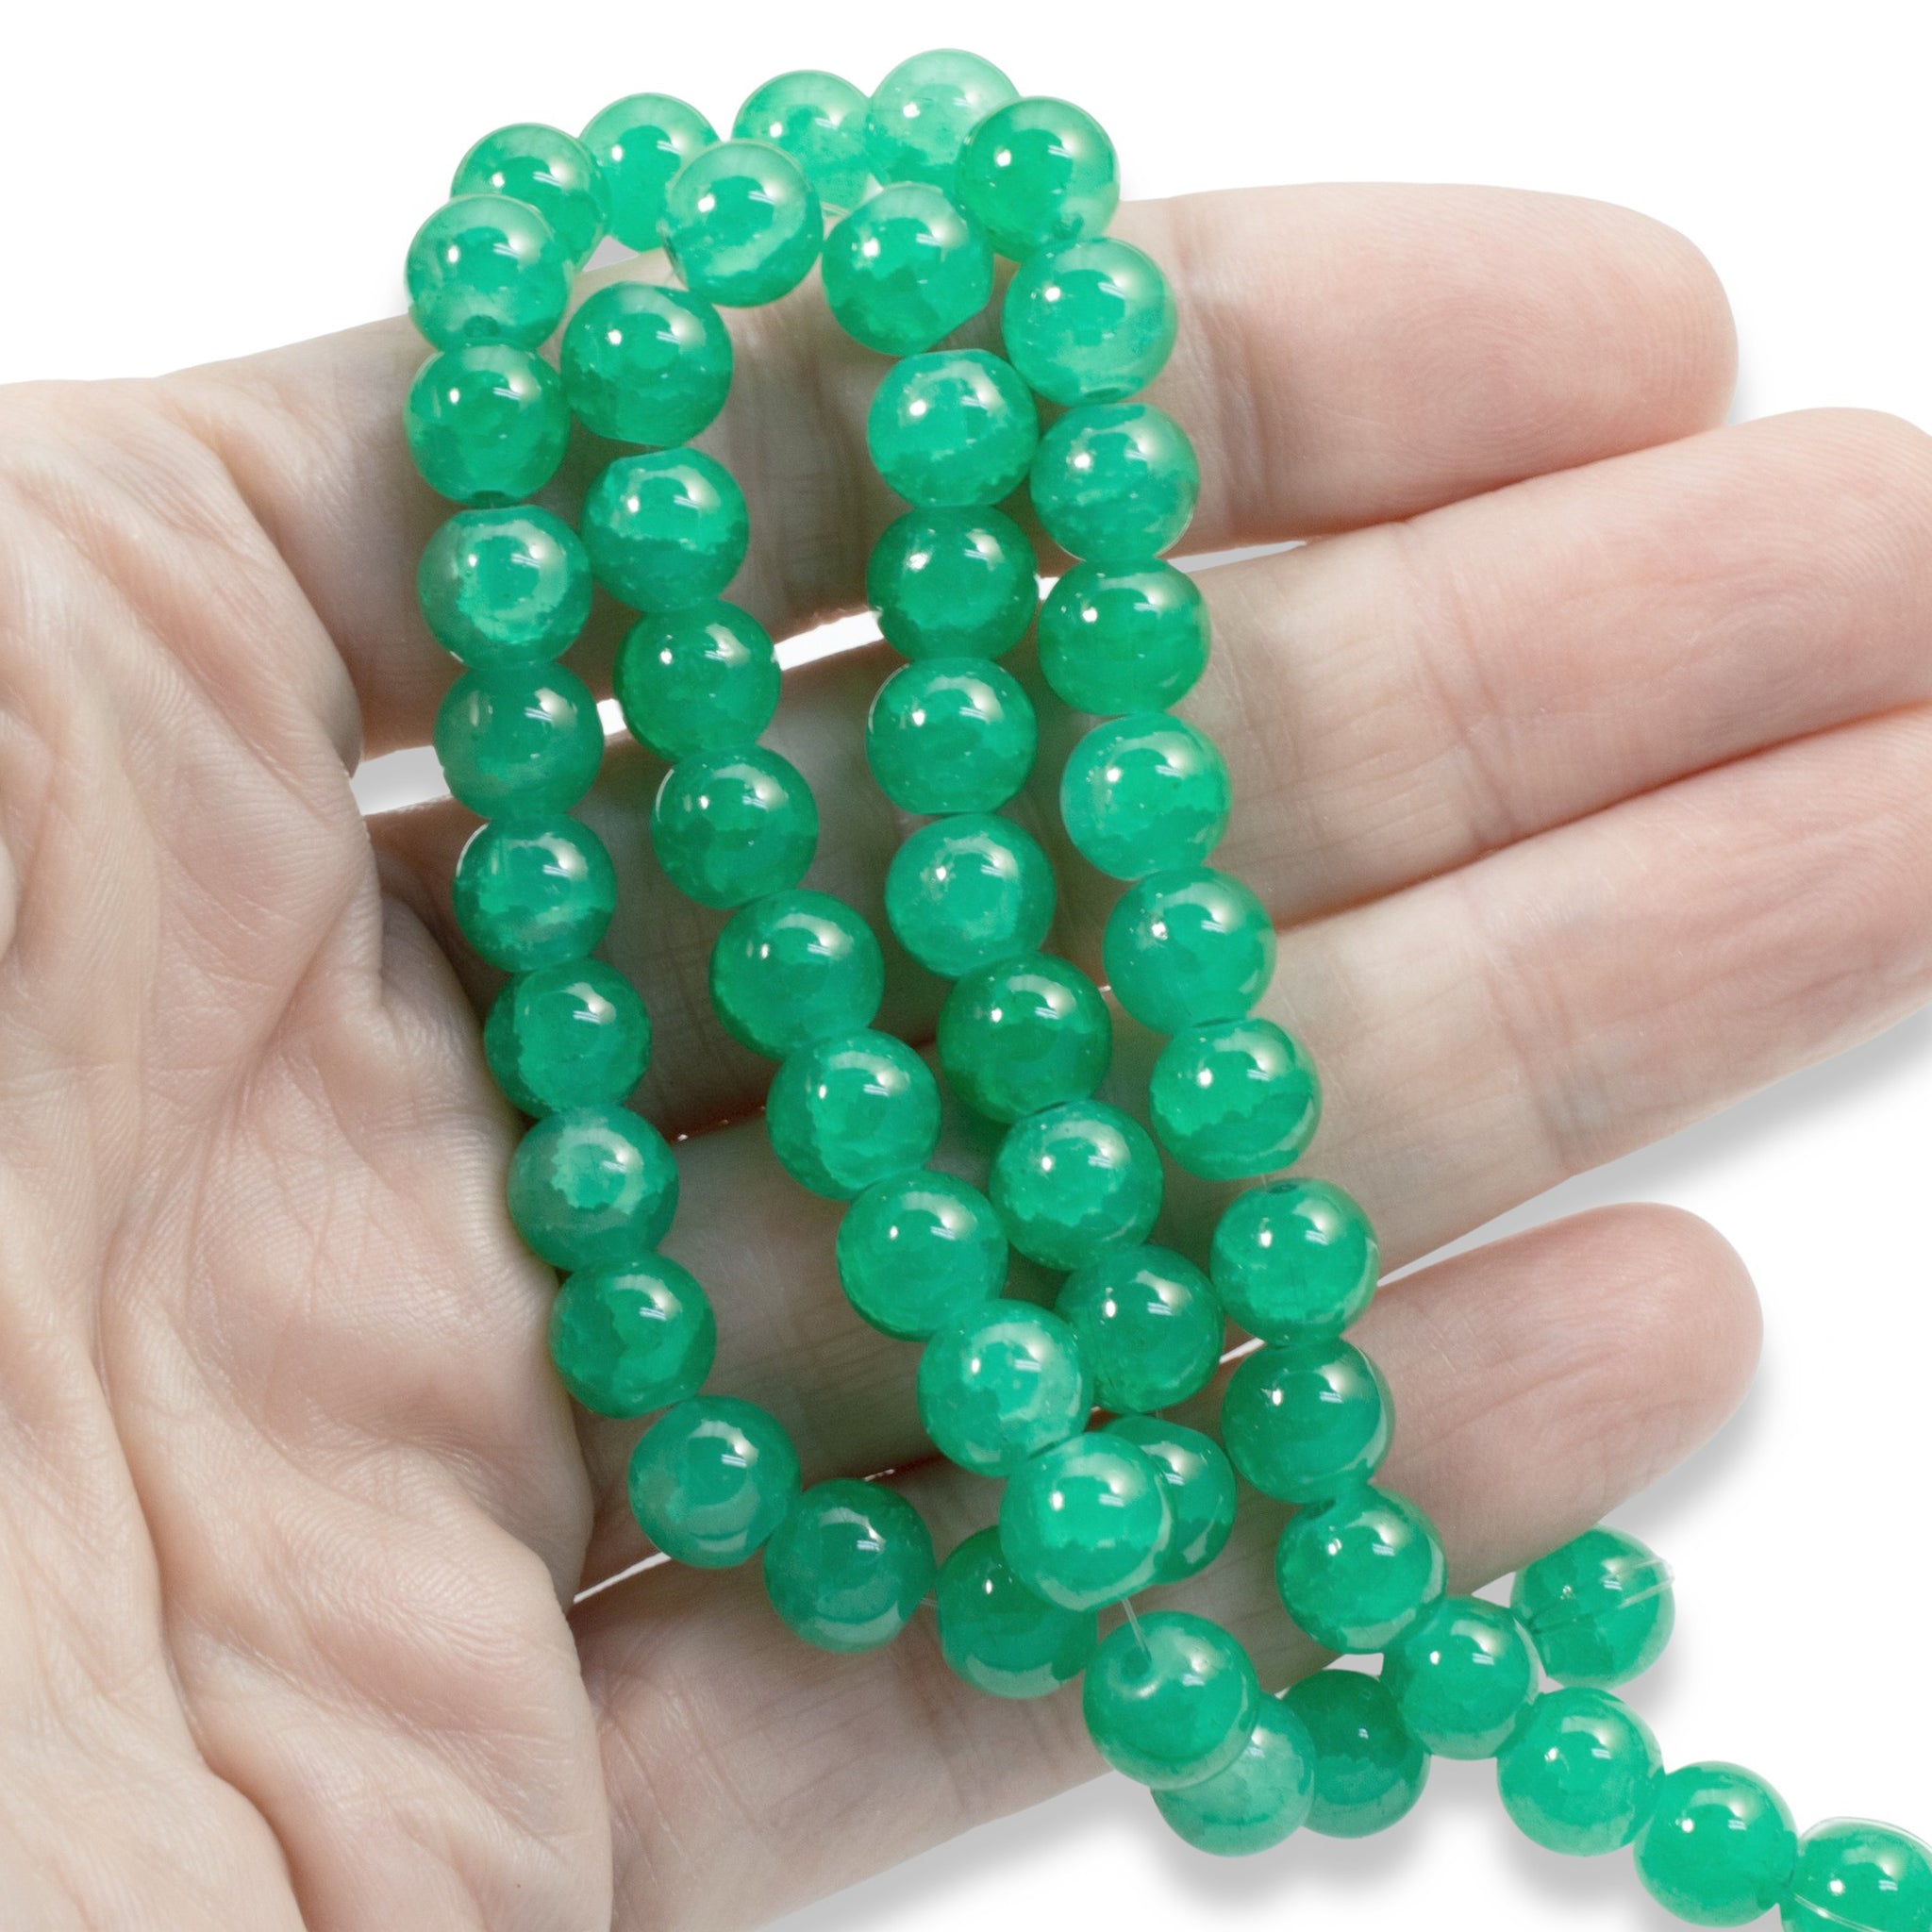 8mm Dark Green Round Glass Crackle Beads | Hackberry Creek